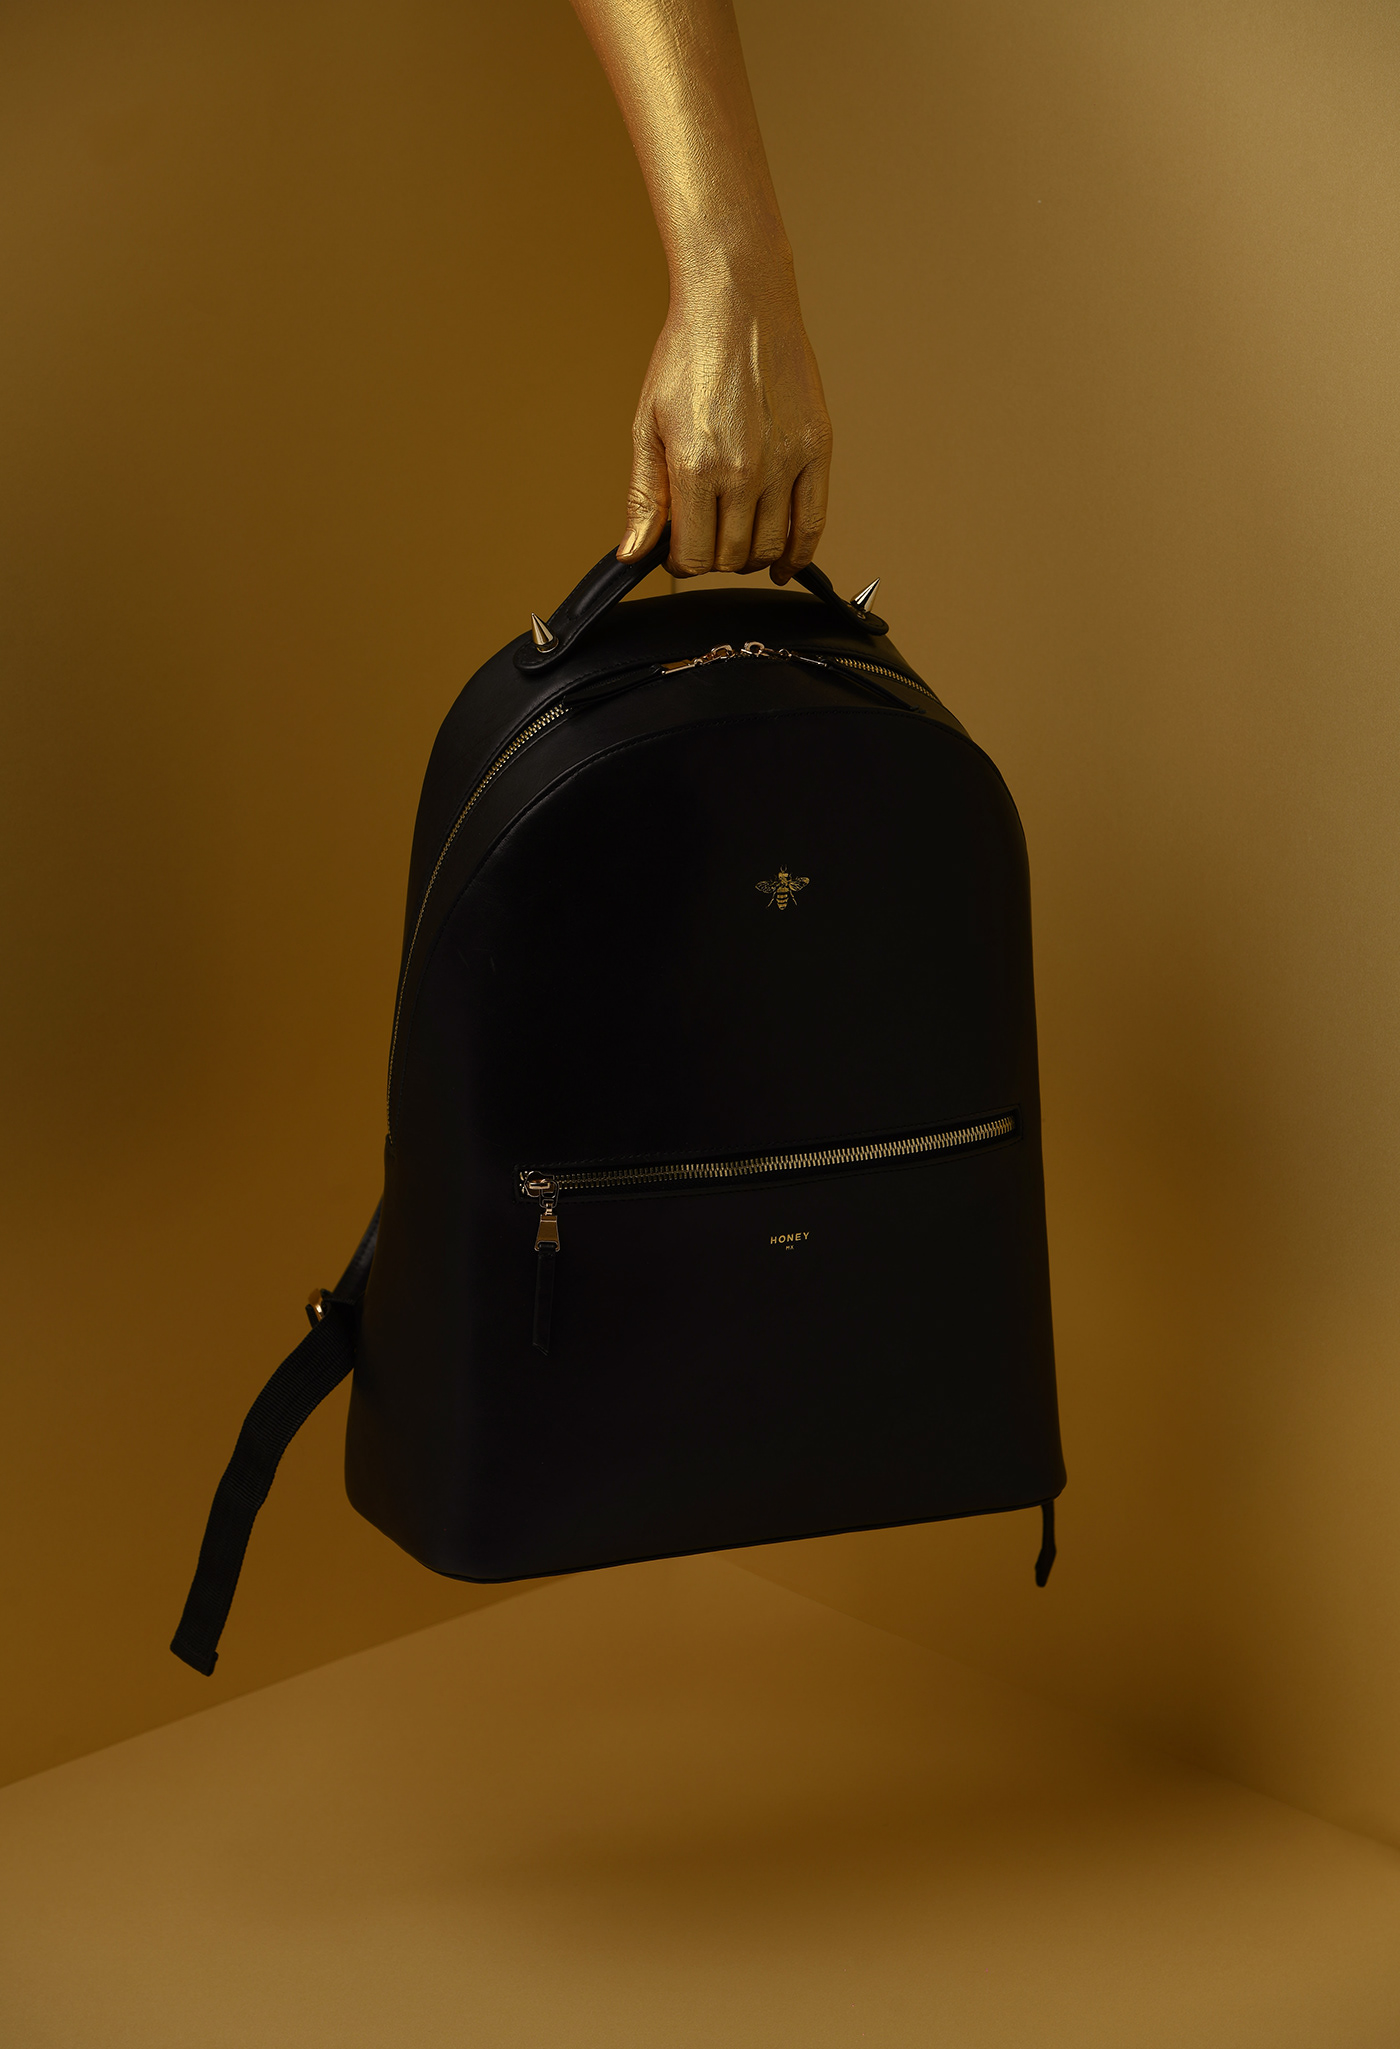 accesories Apparel Design backpack concept design leathergoods